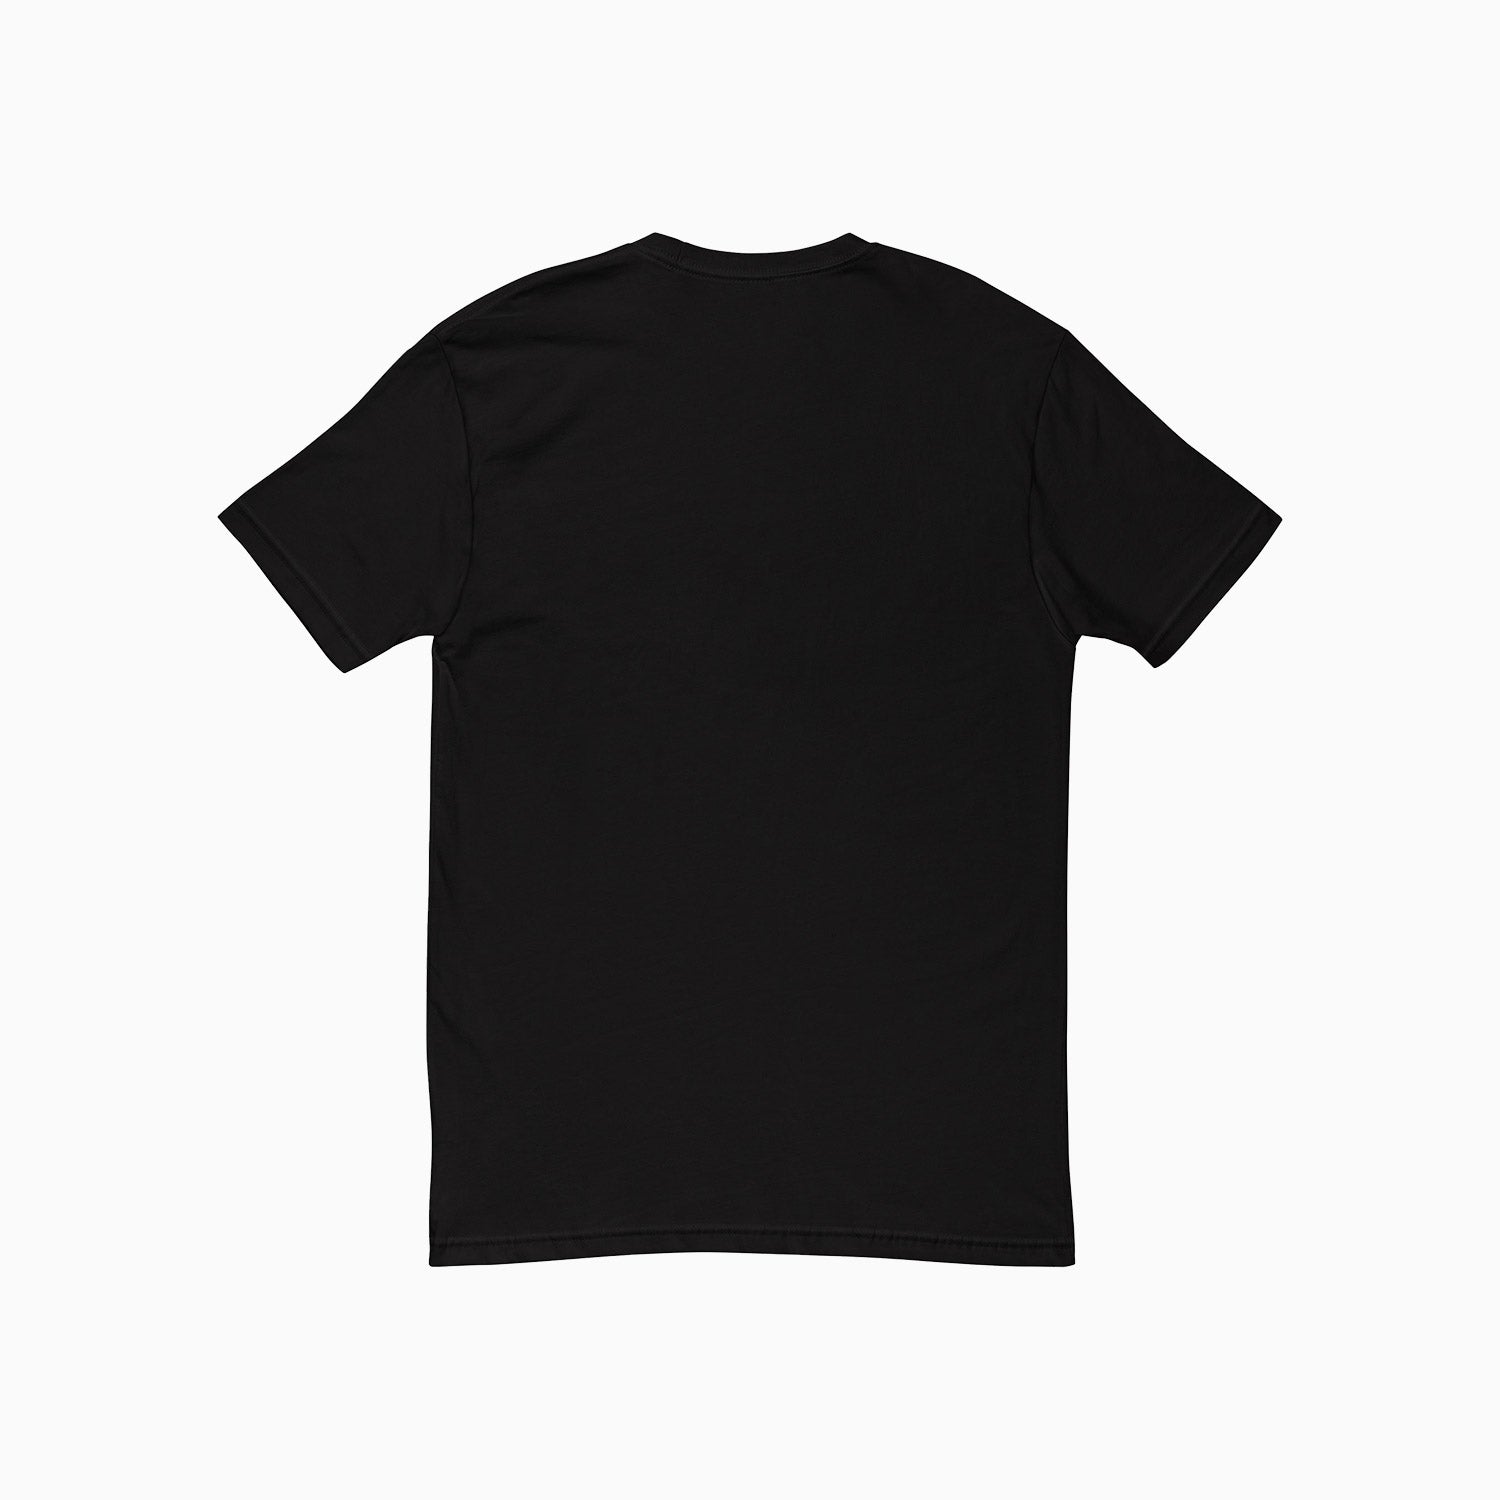 double-s-design-printed-crew-neck-black-t-shirt-for-men-stb8001-black